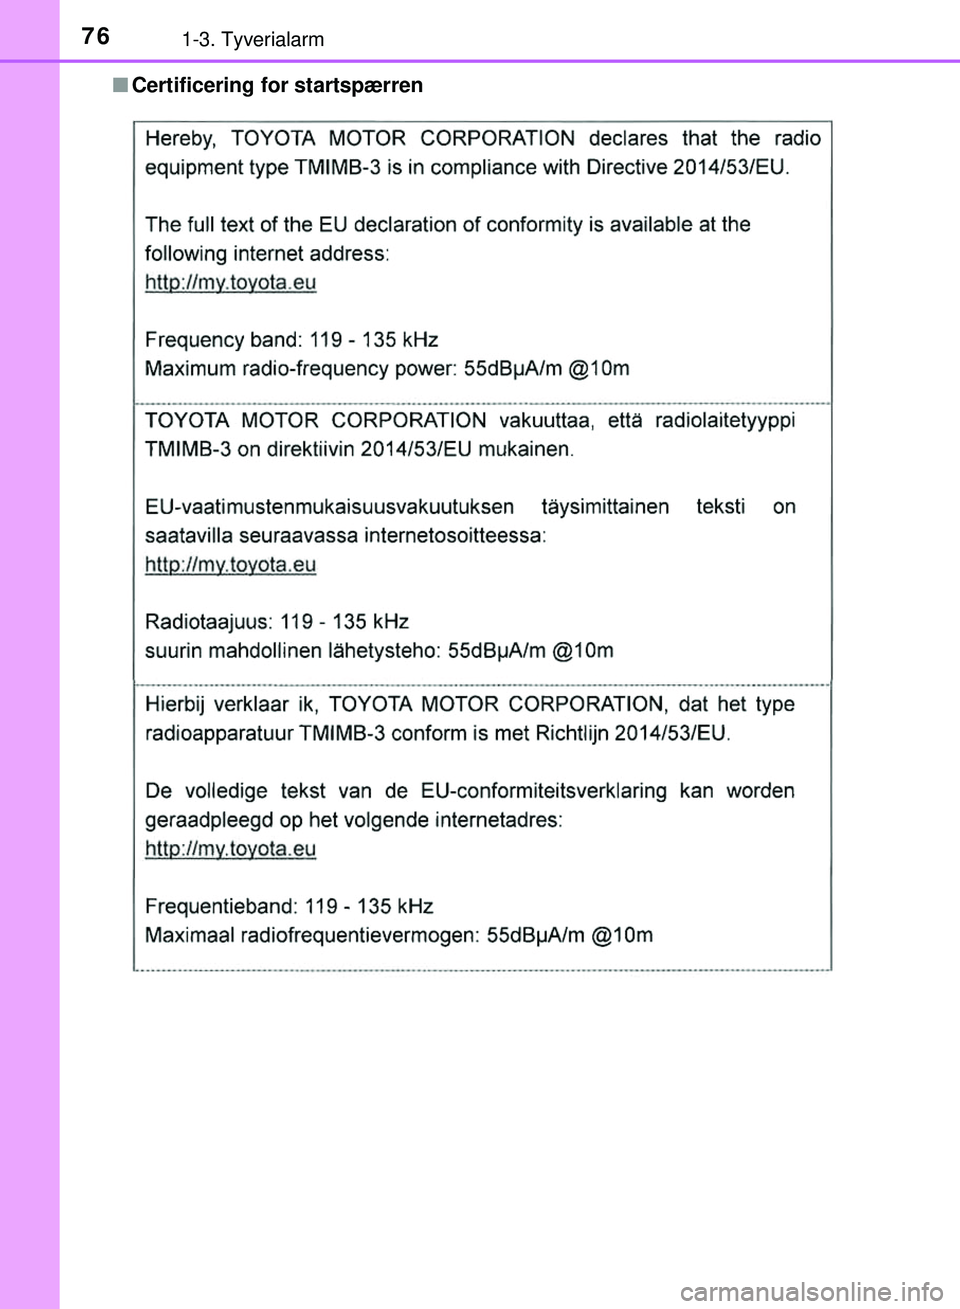 TOYOTA PRIUS PLUG-IN HYBRID 2018  Brugsanvisning (in Danish) 761-3. Tyverialarm
OM47C99DKn
Certificering for startspærren
OM47C99DK.book  Page 76  Friday, August 10, 2018  11:20 AM 